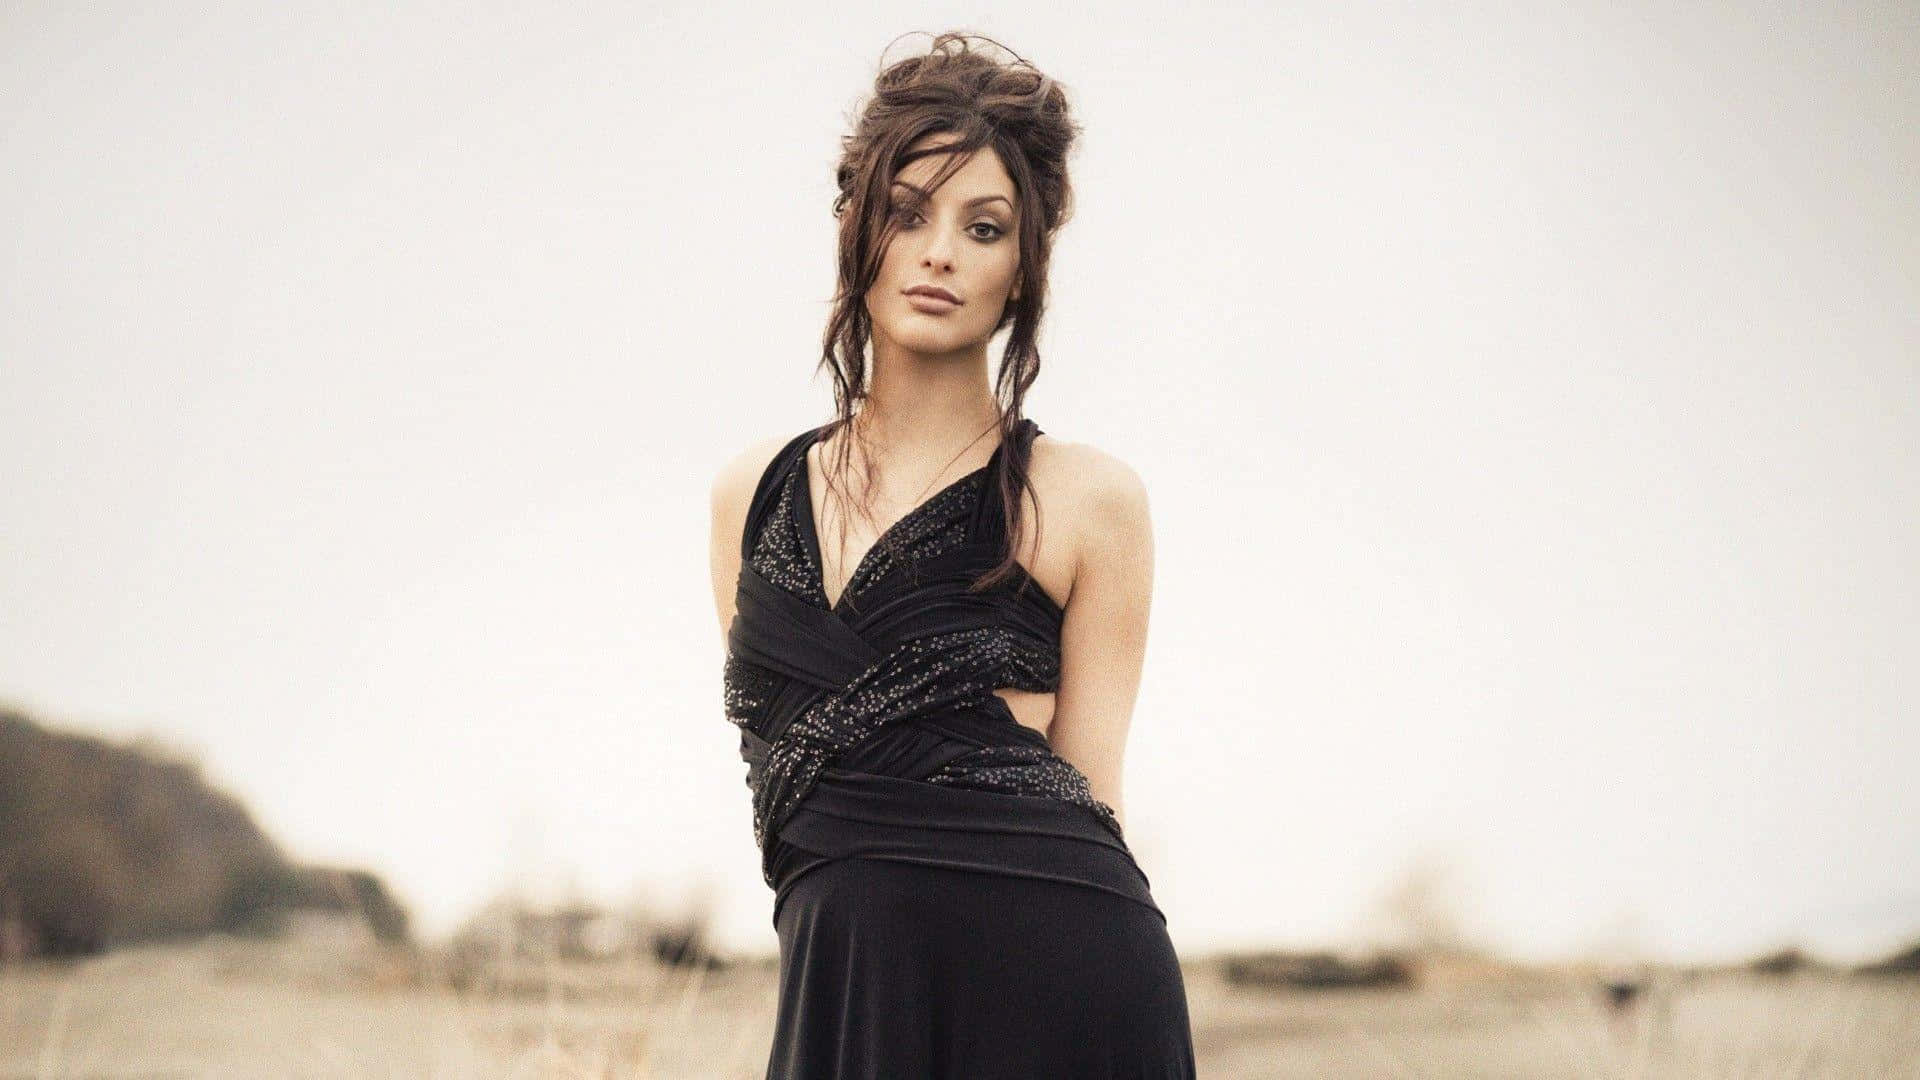 Erica Cerra Elegant Black Dress Outdoors Wallpaper